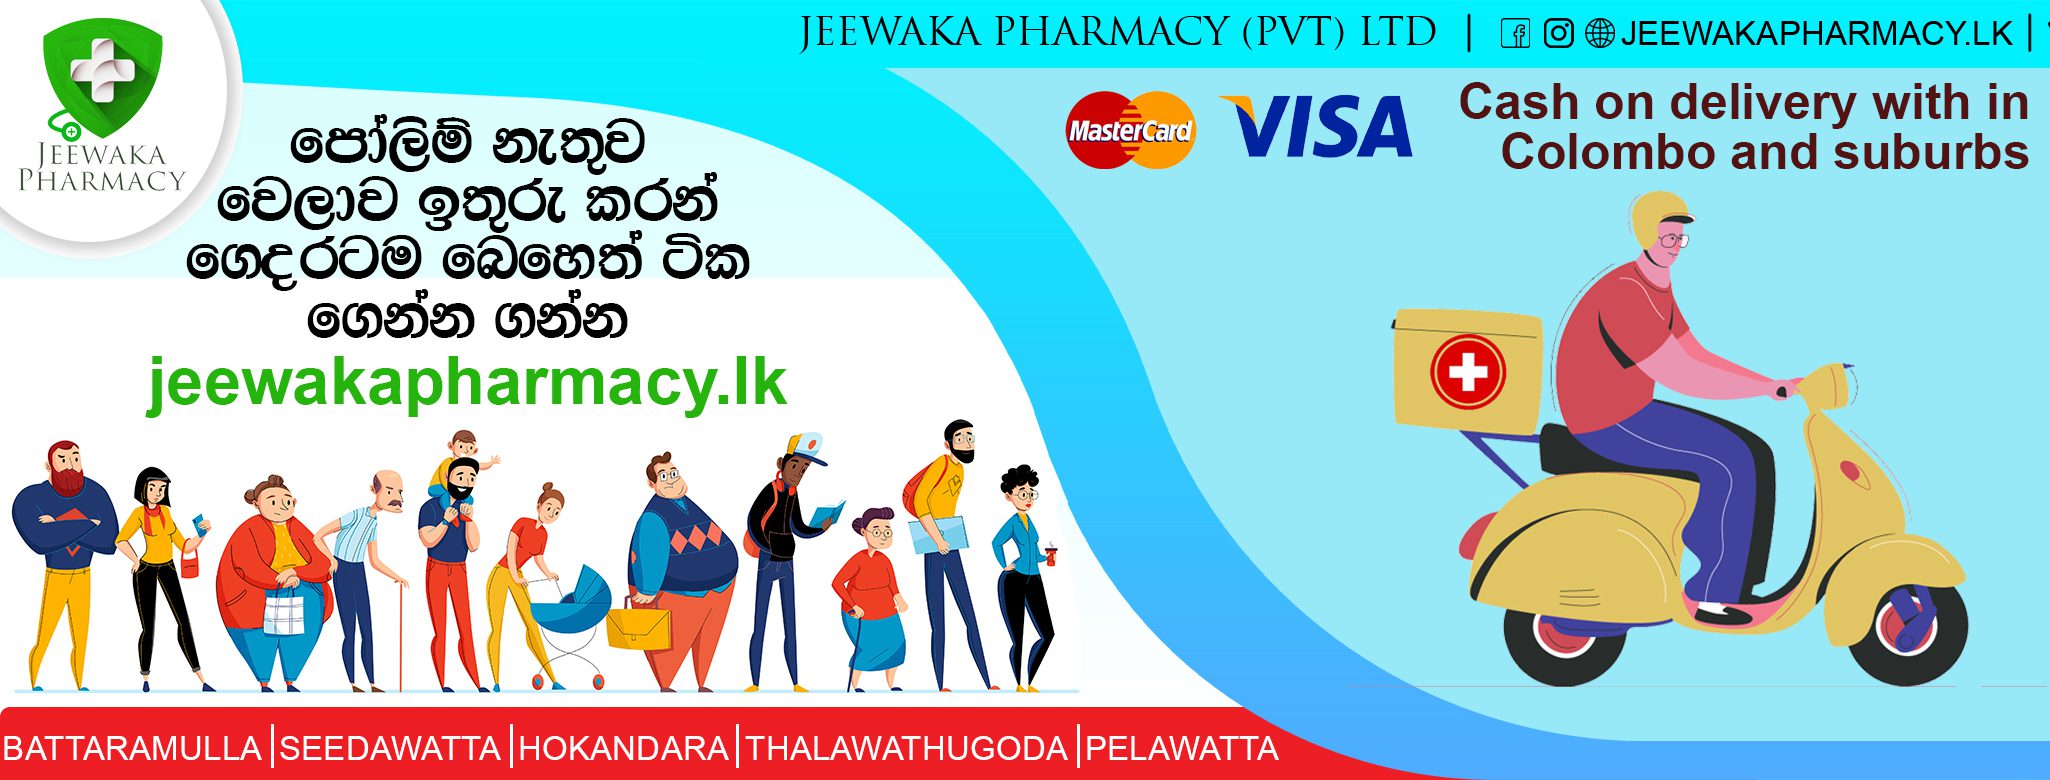 Best Place to Buy Medicine & Cosmetics in Sri Lanka - Jeewaka 